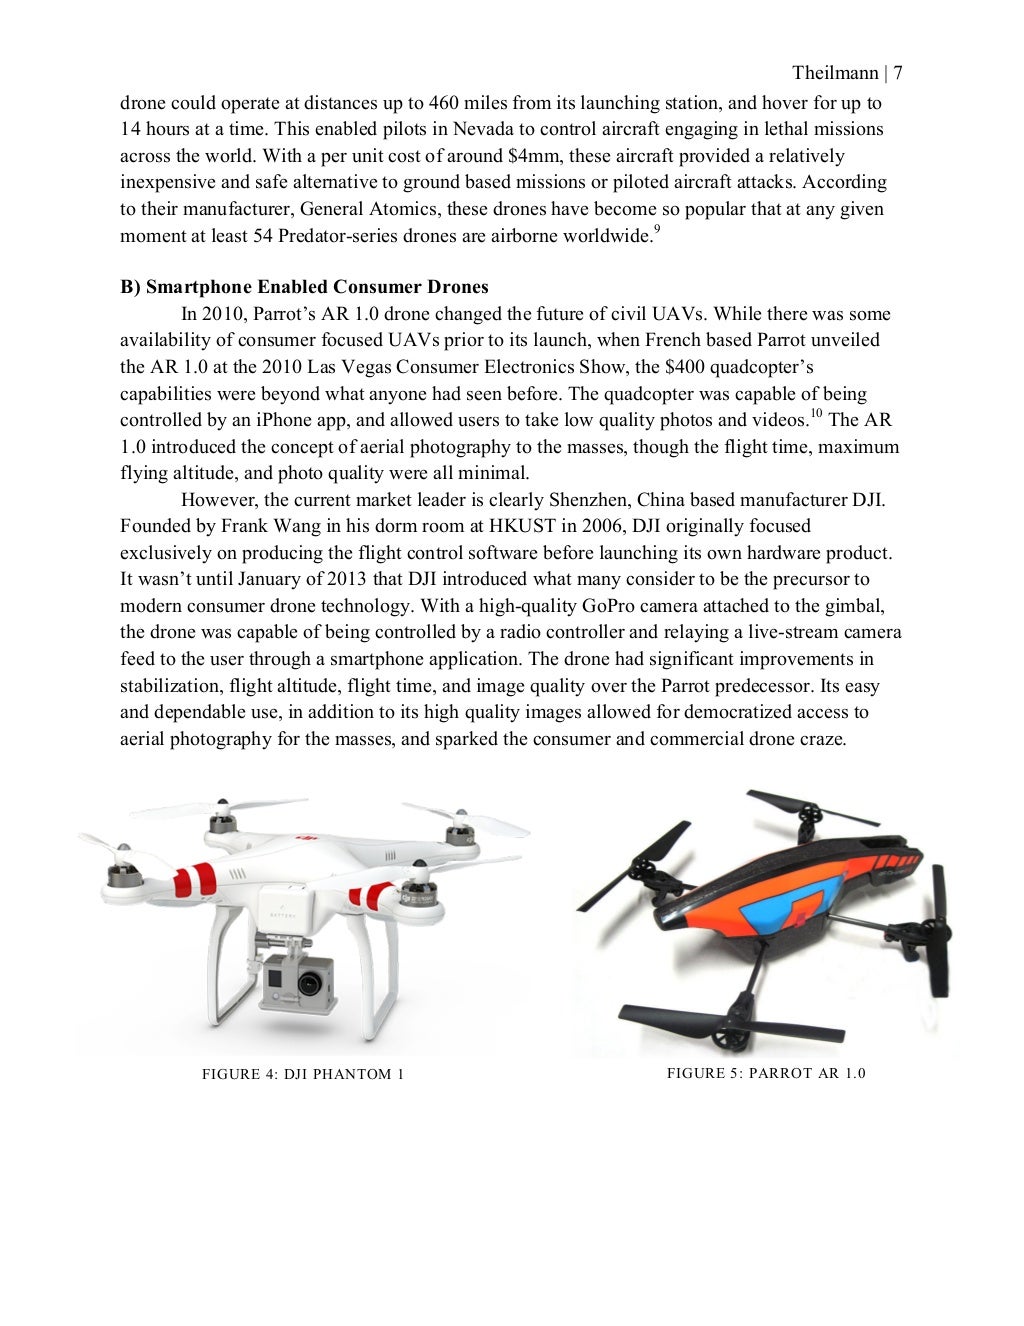 drone thesis topics